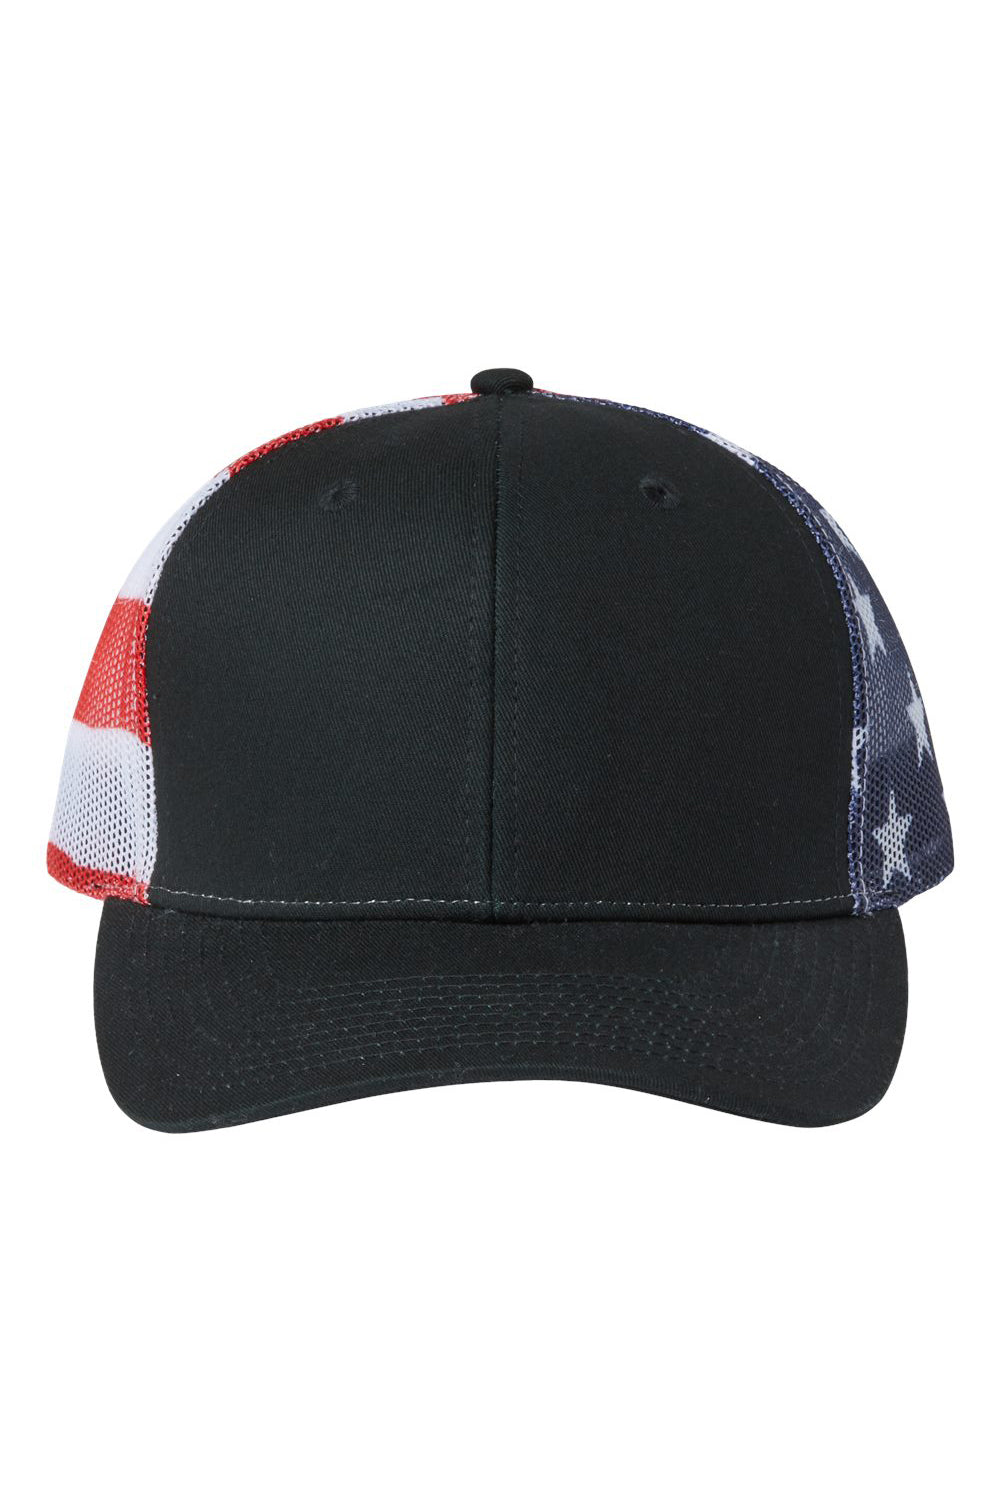 Kati S700M Mens Printed Mesh Trucker Hat Black/USA Flag Flat Front